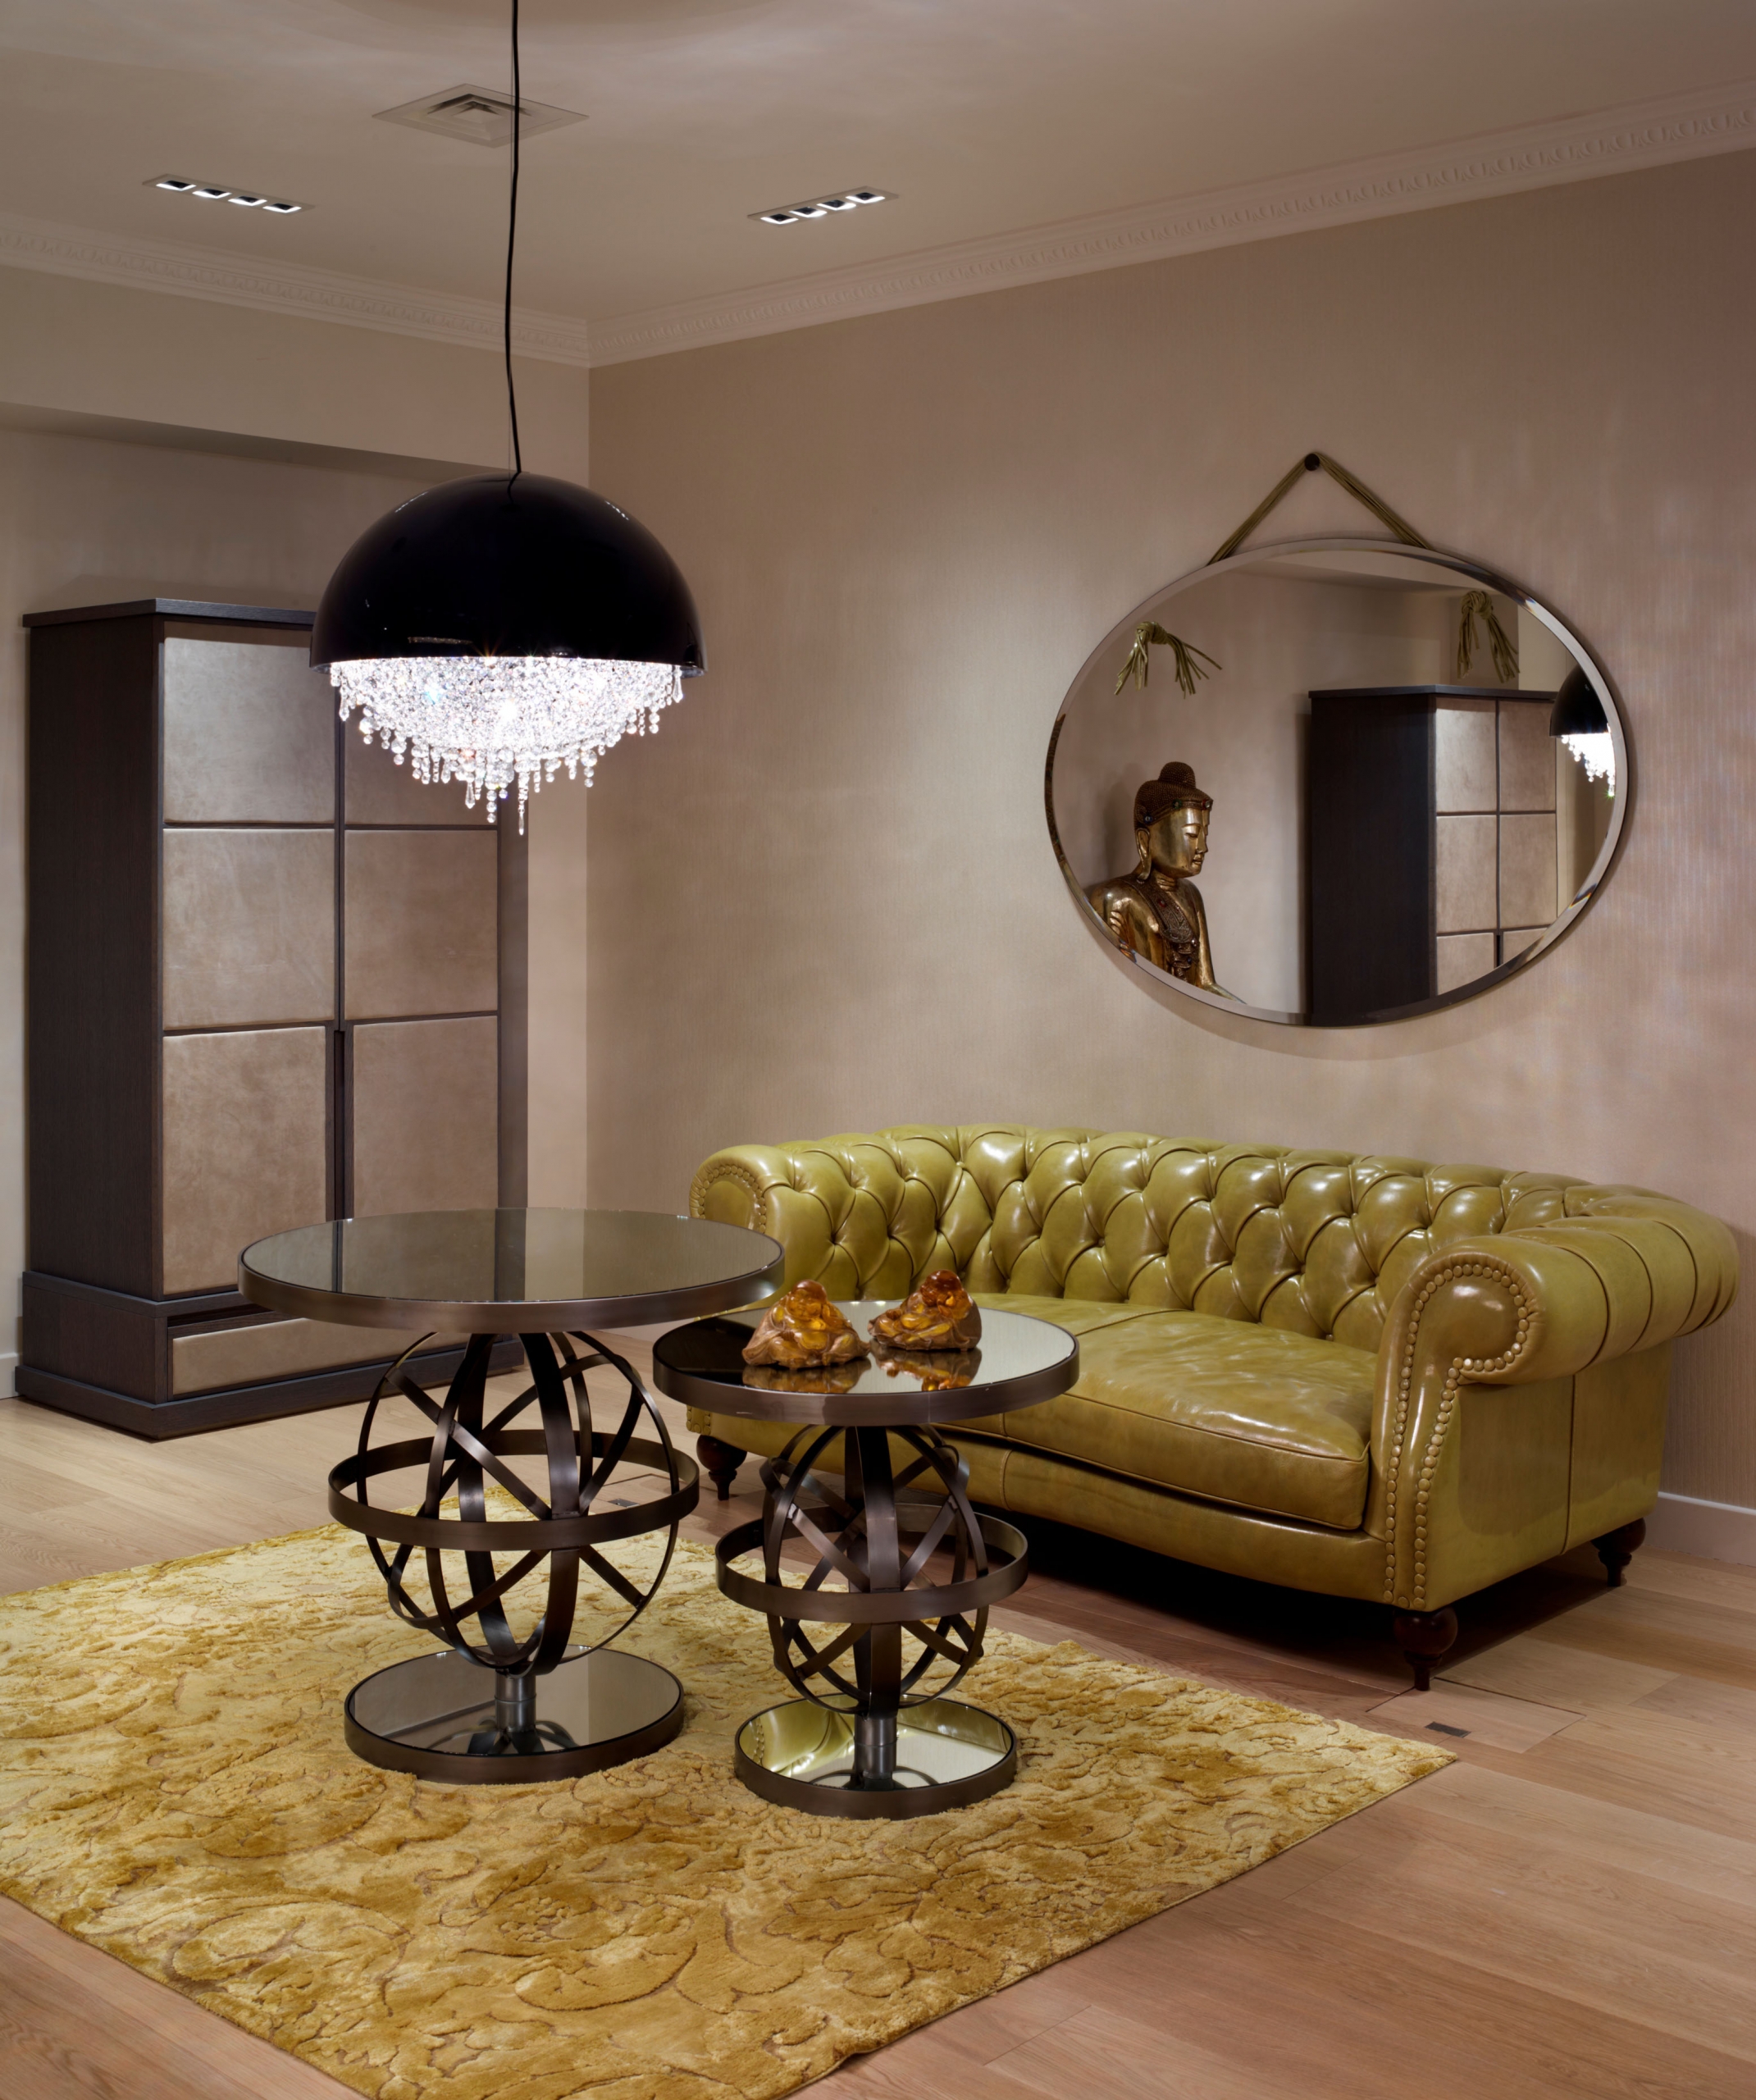 Black Ozero chandelier in luxury interior design